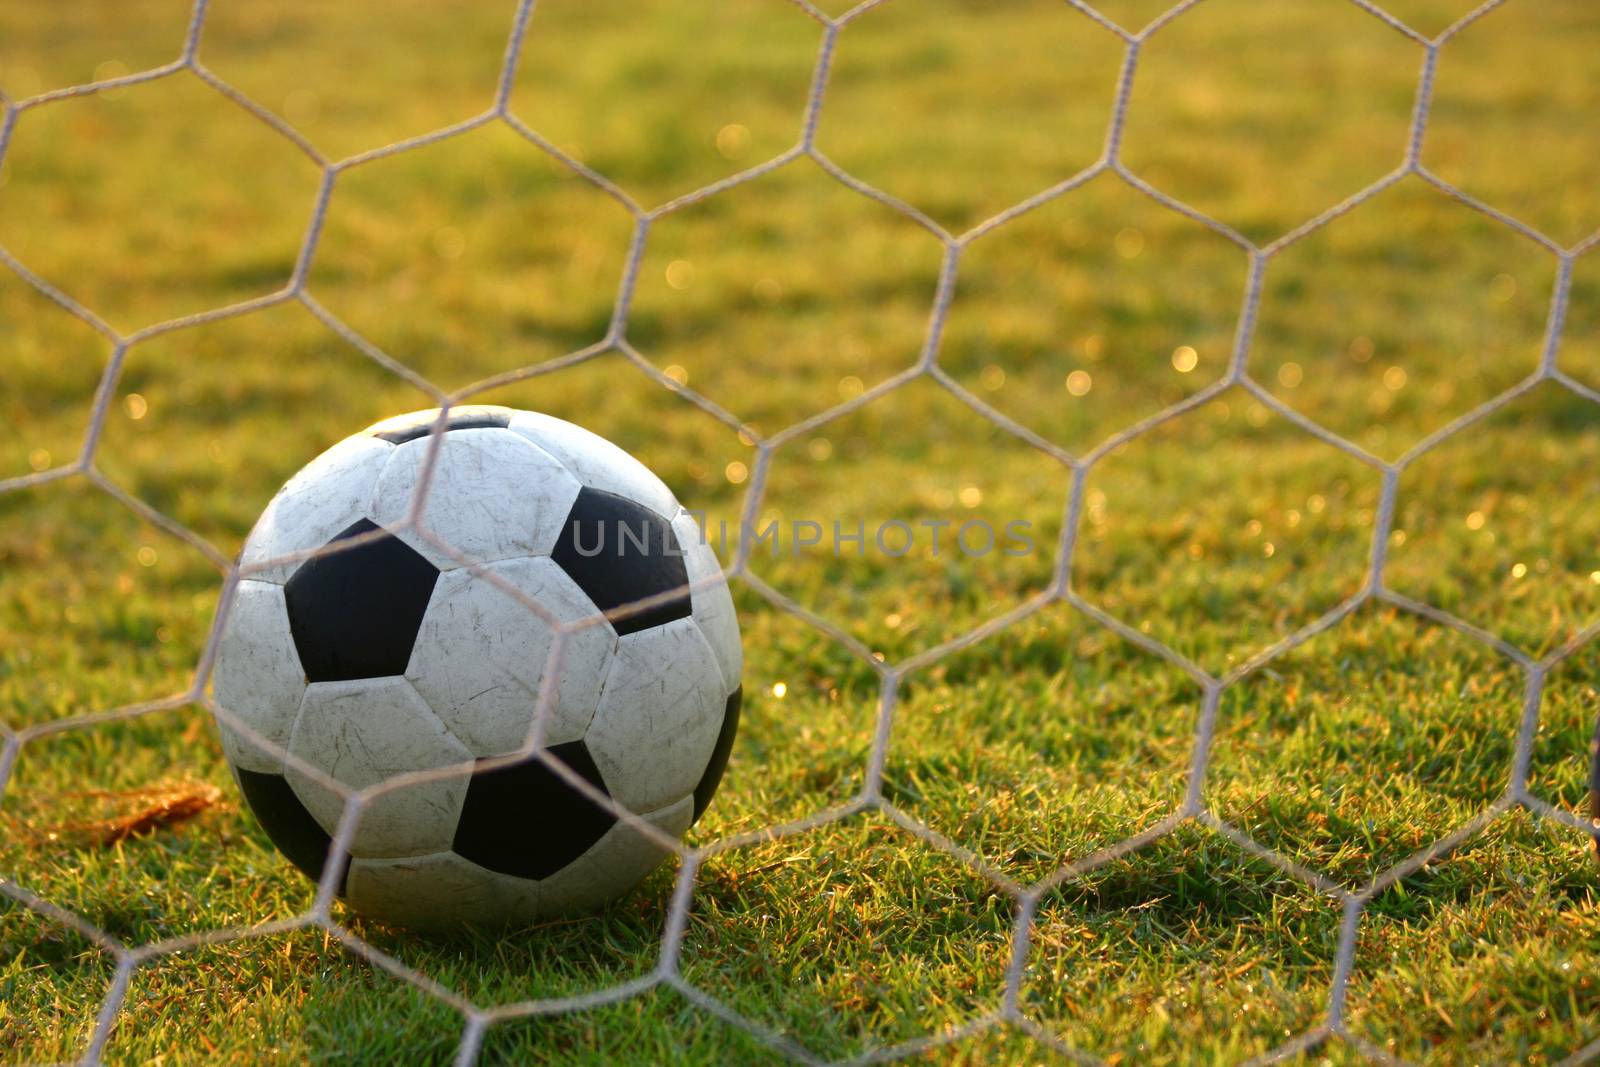 Soccer football in Goal net with green grass field